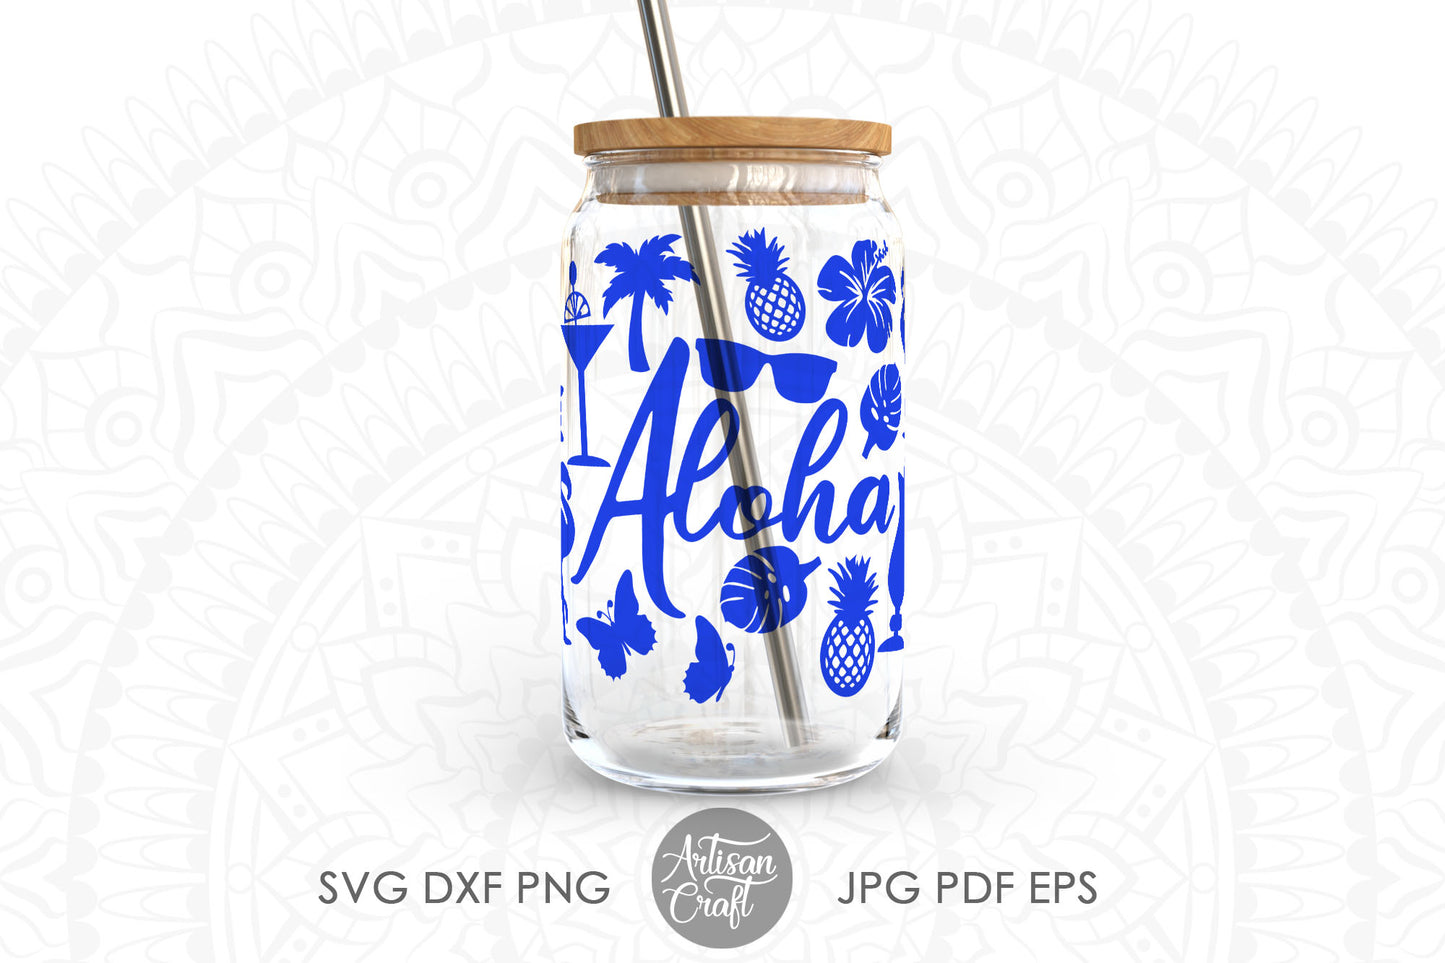 Coffee glass can wrap SVG showing Aloha